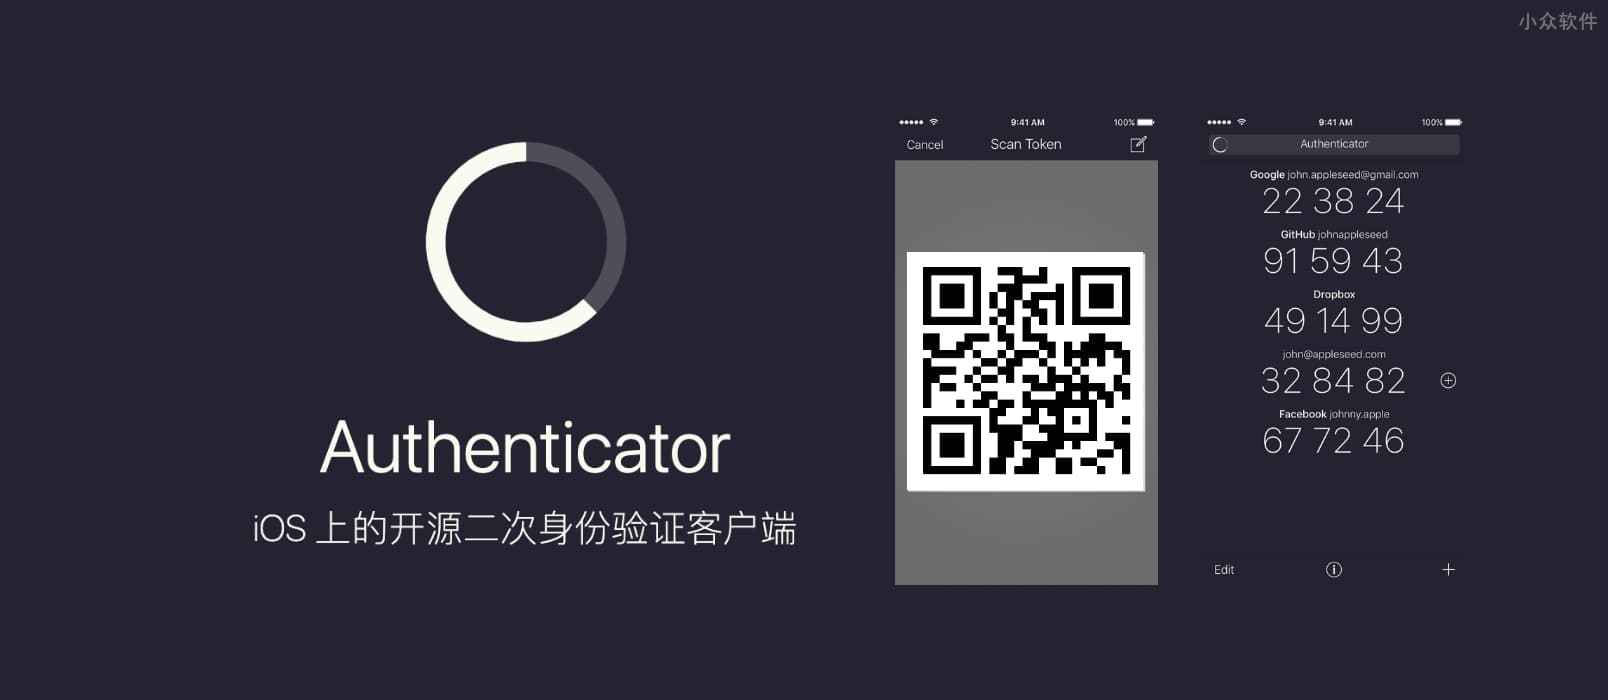 Authenticator – 开源二次验证客户端[iPhone]